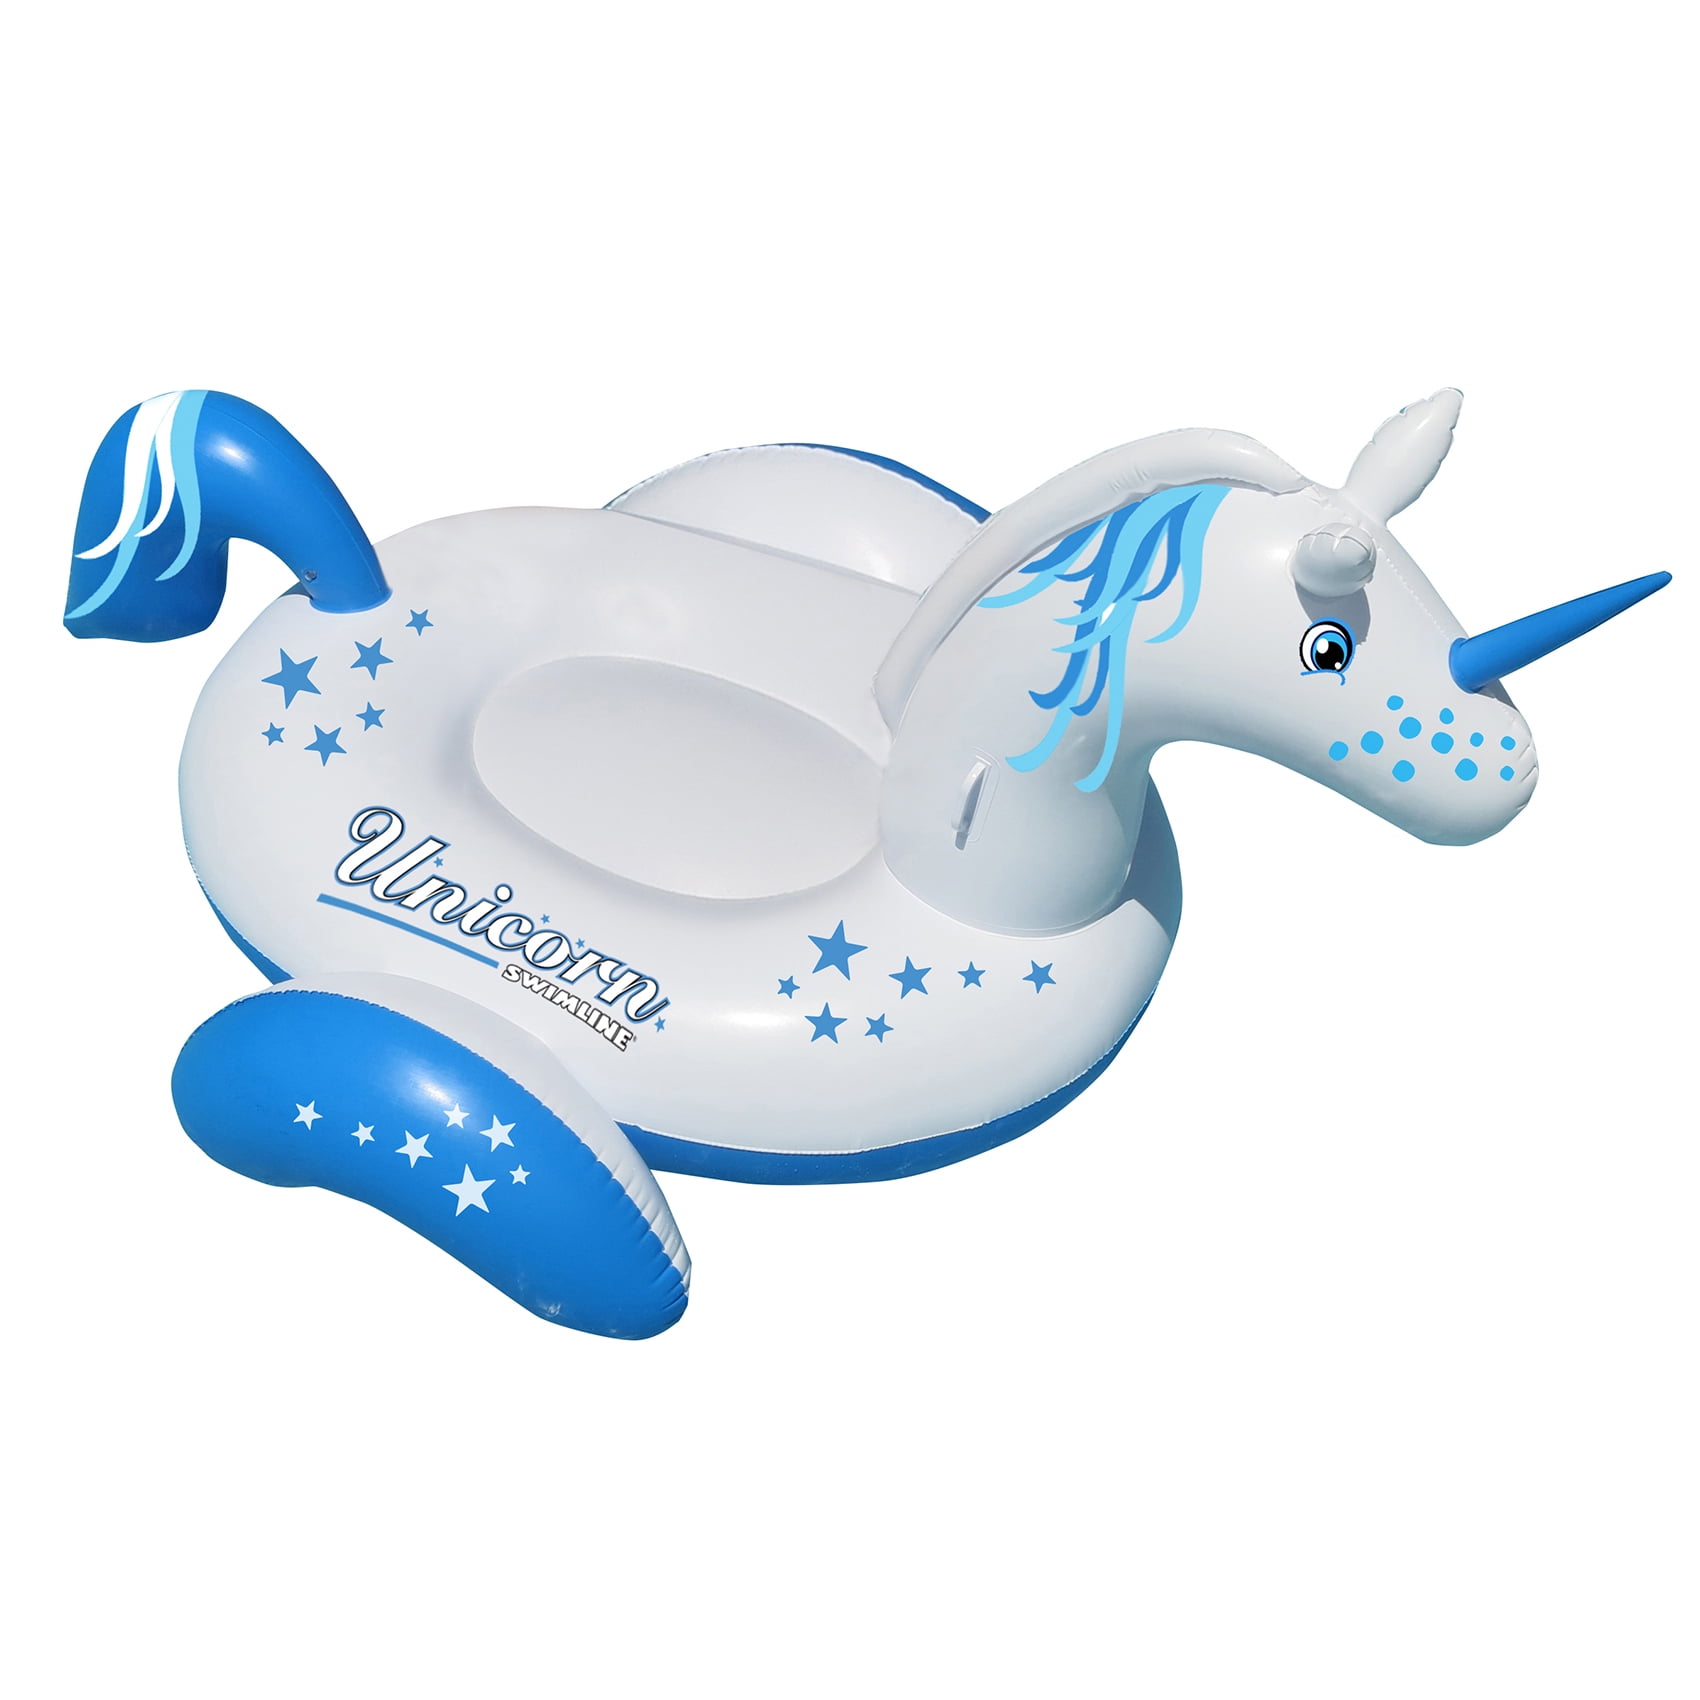 Unicorn Pool FloatInflatable Cloud Rider Ride-On Kids Toy Blue Wave NT2697 